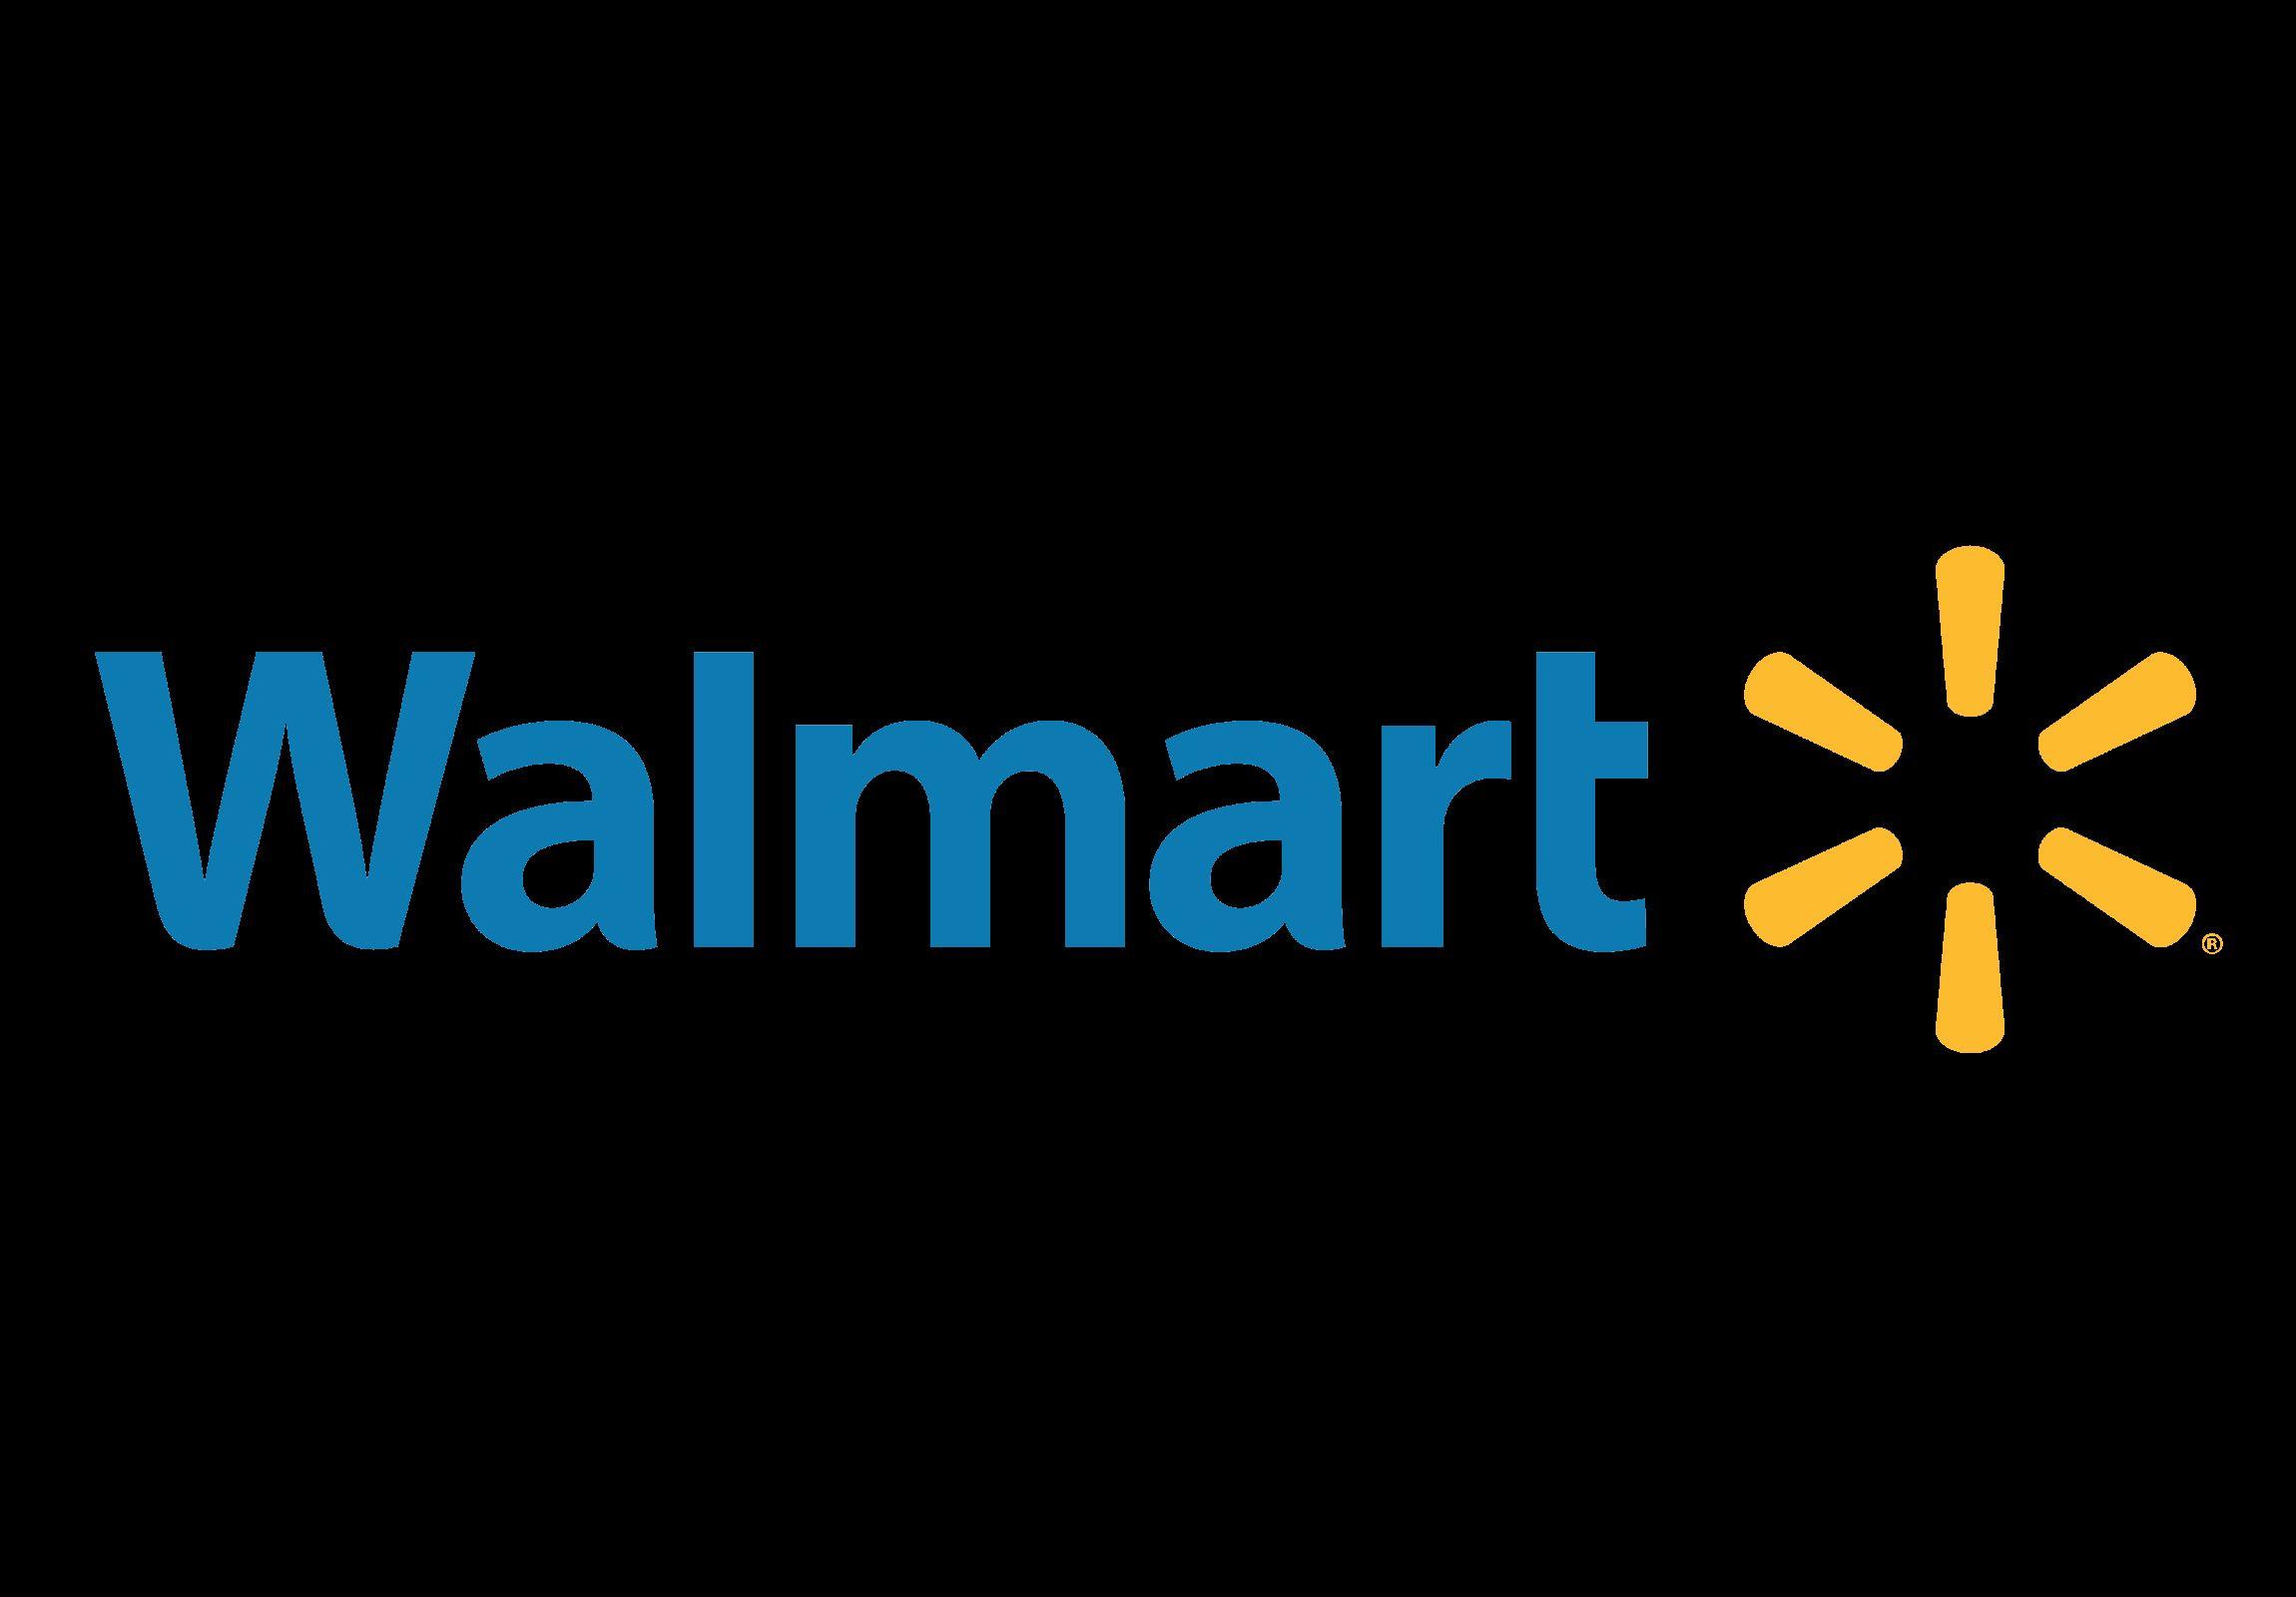 Walamrt Logo - Walmart Logo, Walmart Symbol, History and Evolution